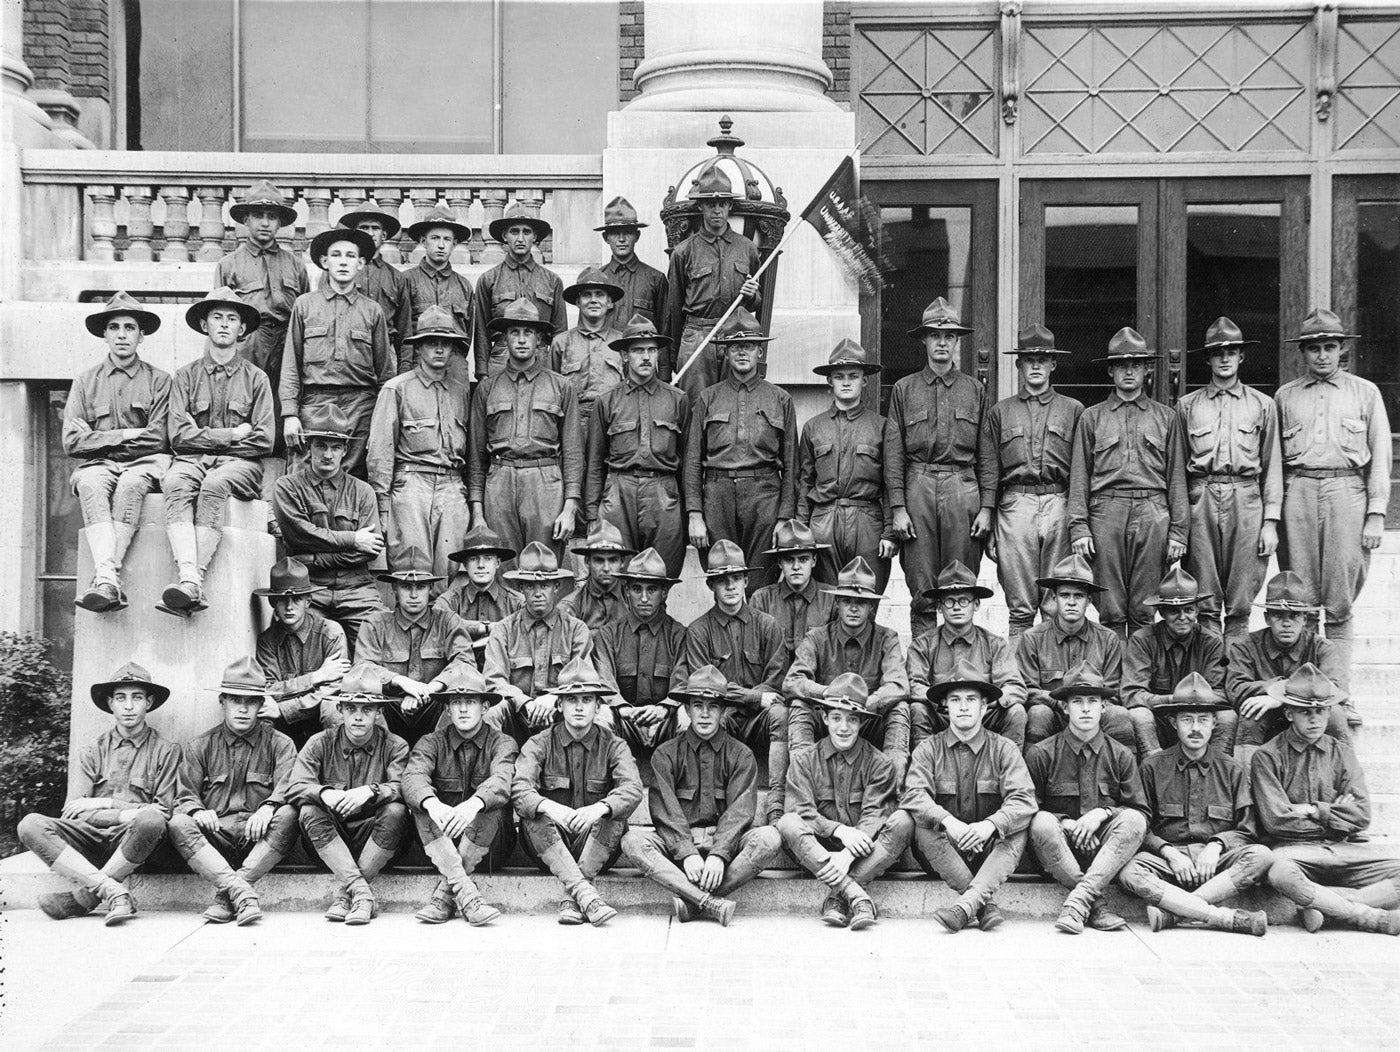 World War I, University of Pennsylvania Army unit, section 554, Allentown, 1917